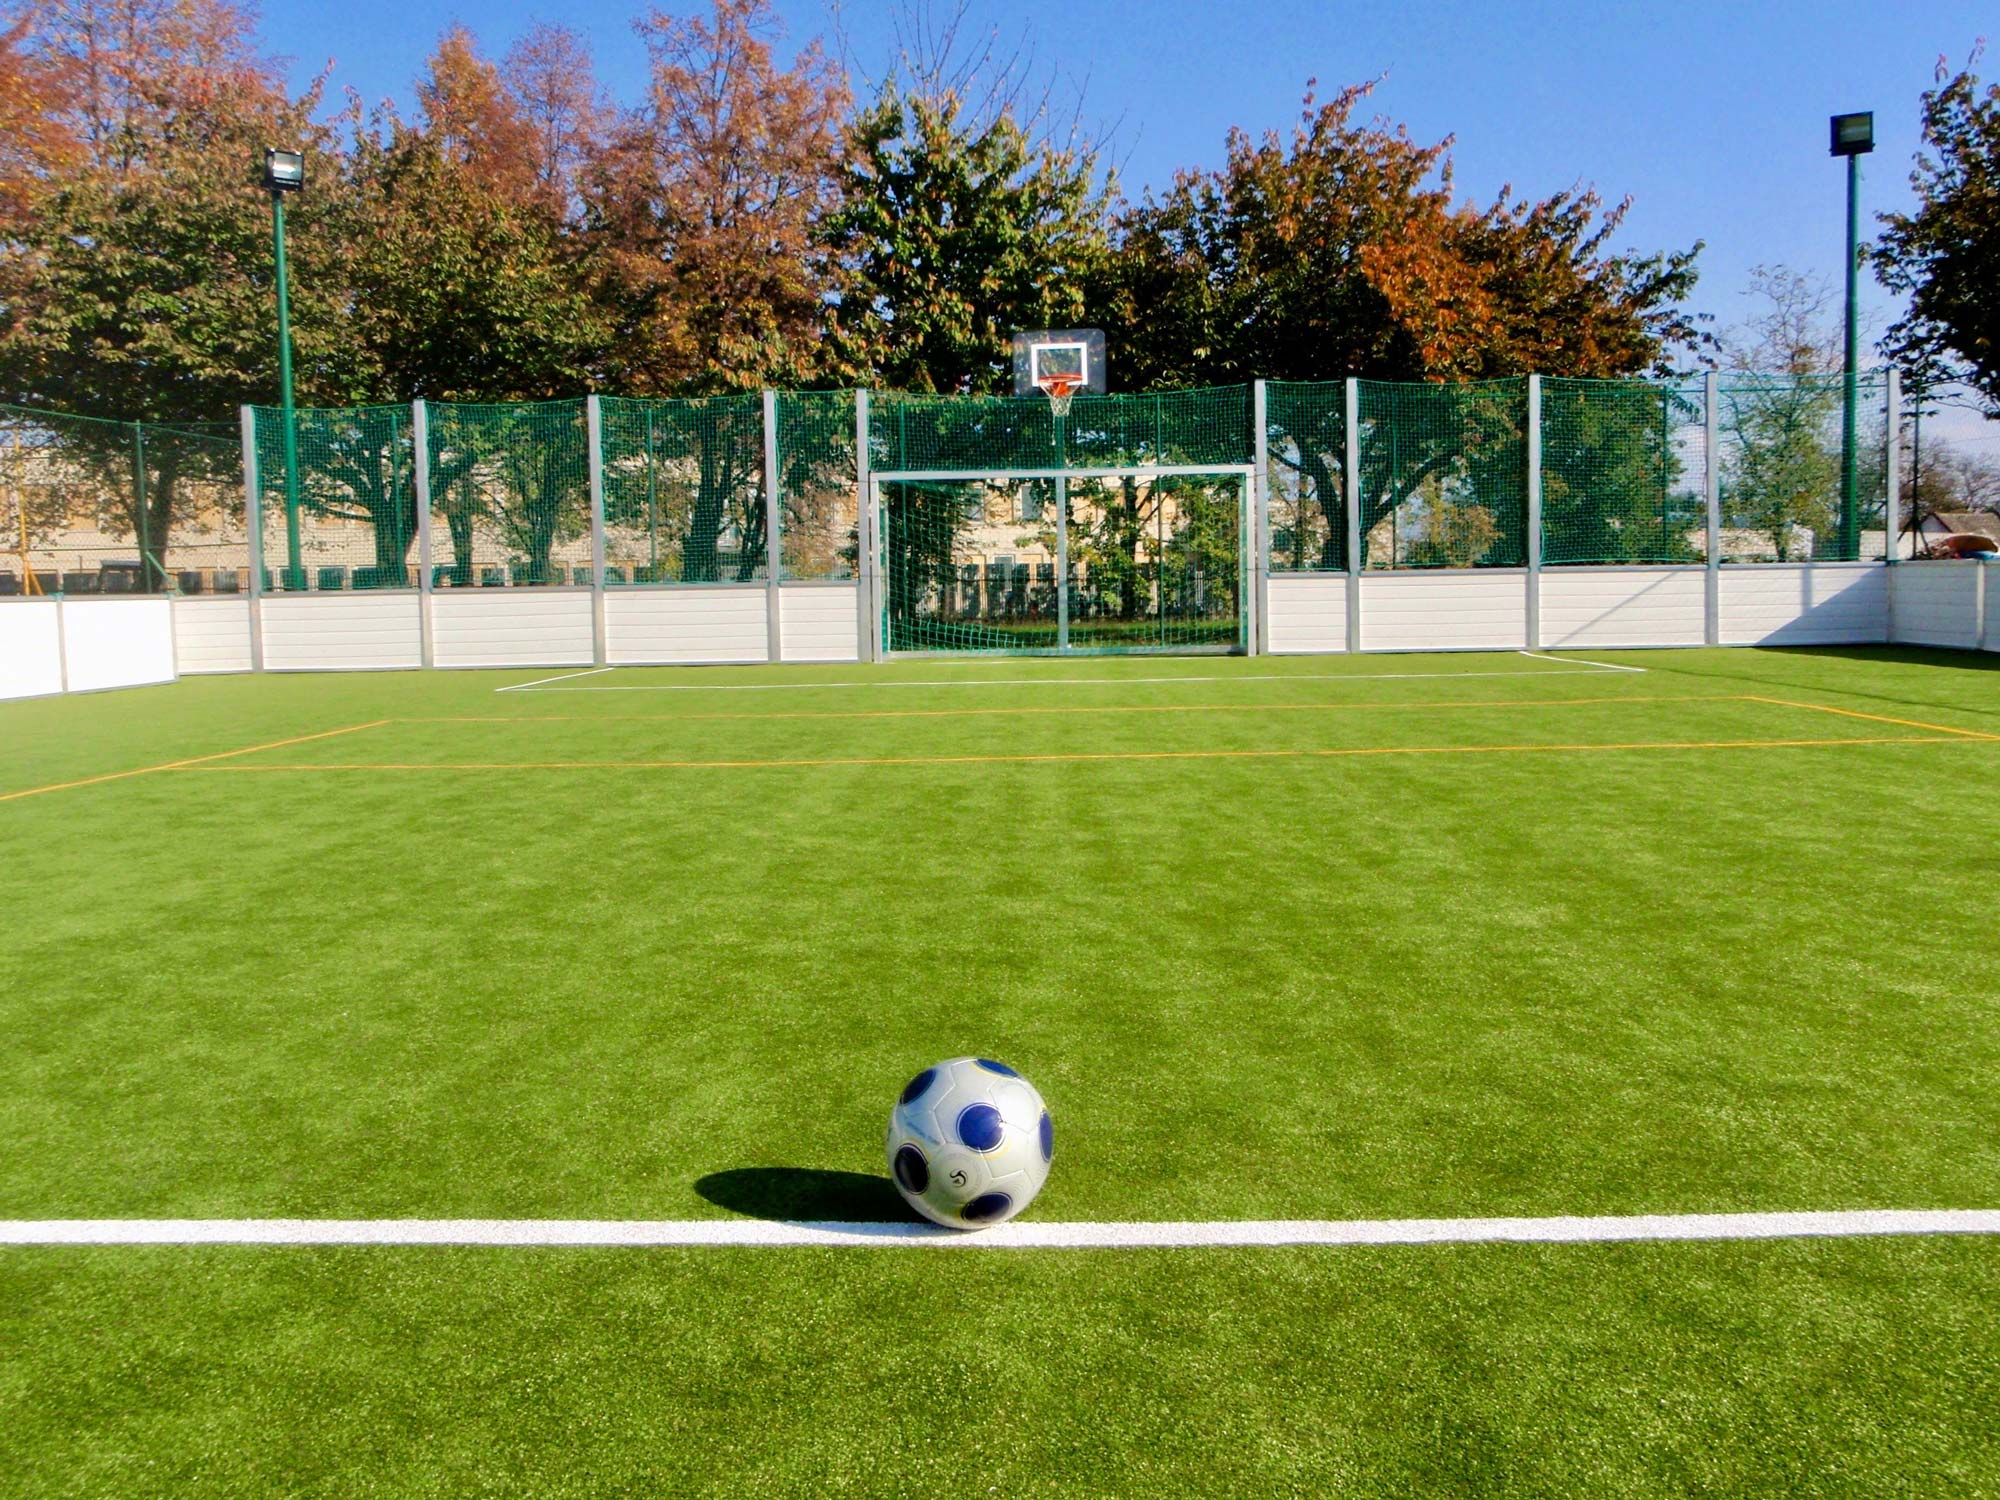 sports-field-artificial-turf